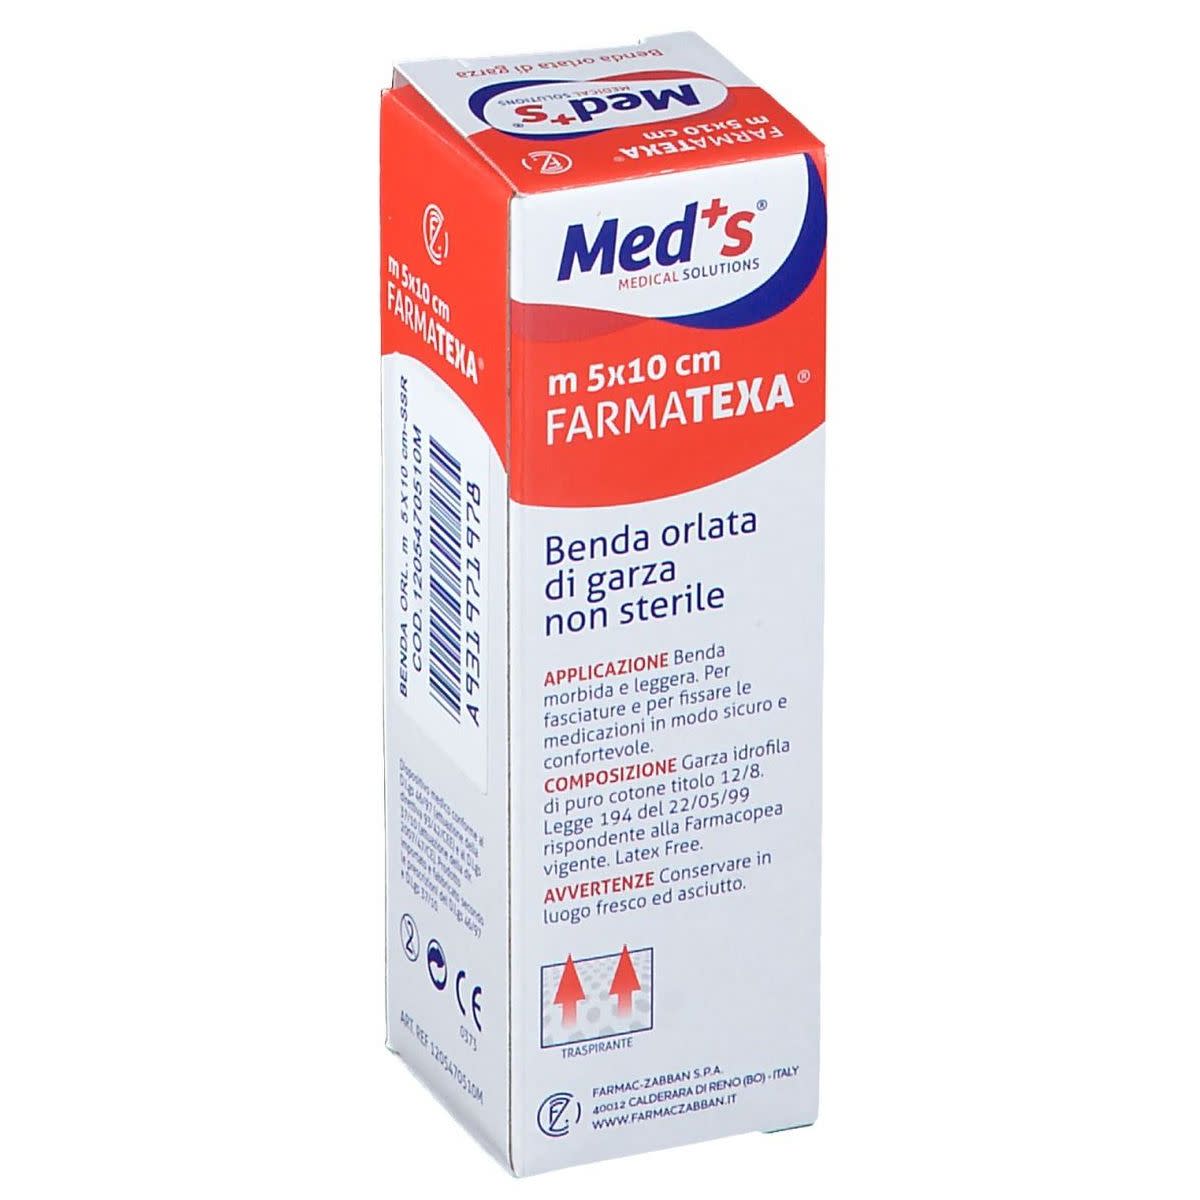 931971978 - Med's Farmatex Benda orlata di garza 12/8 5mx10cm - 4722450_3.jpg